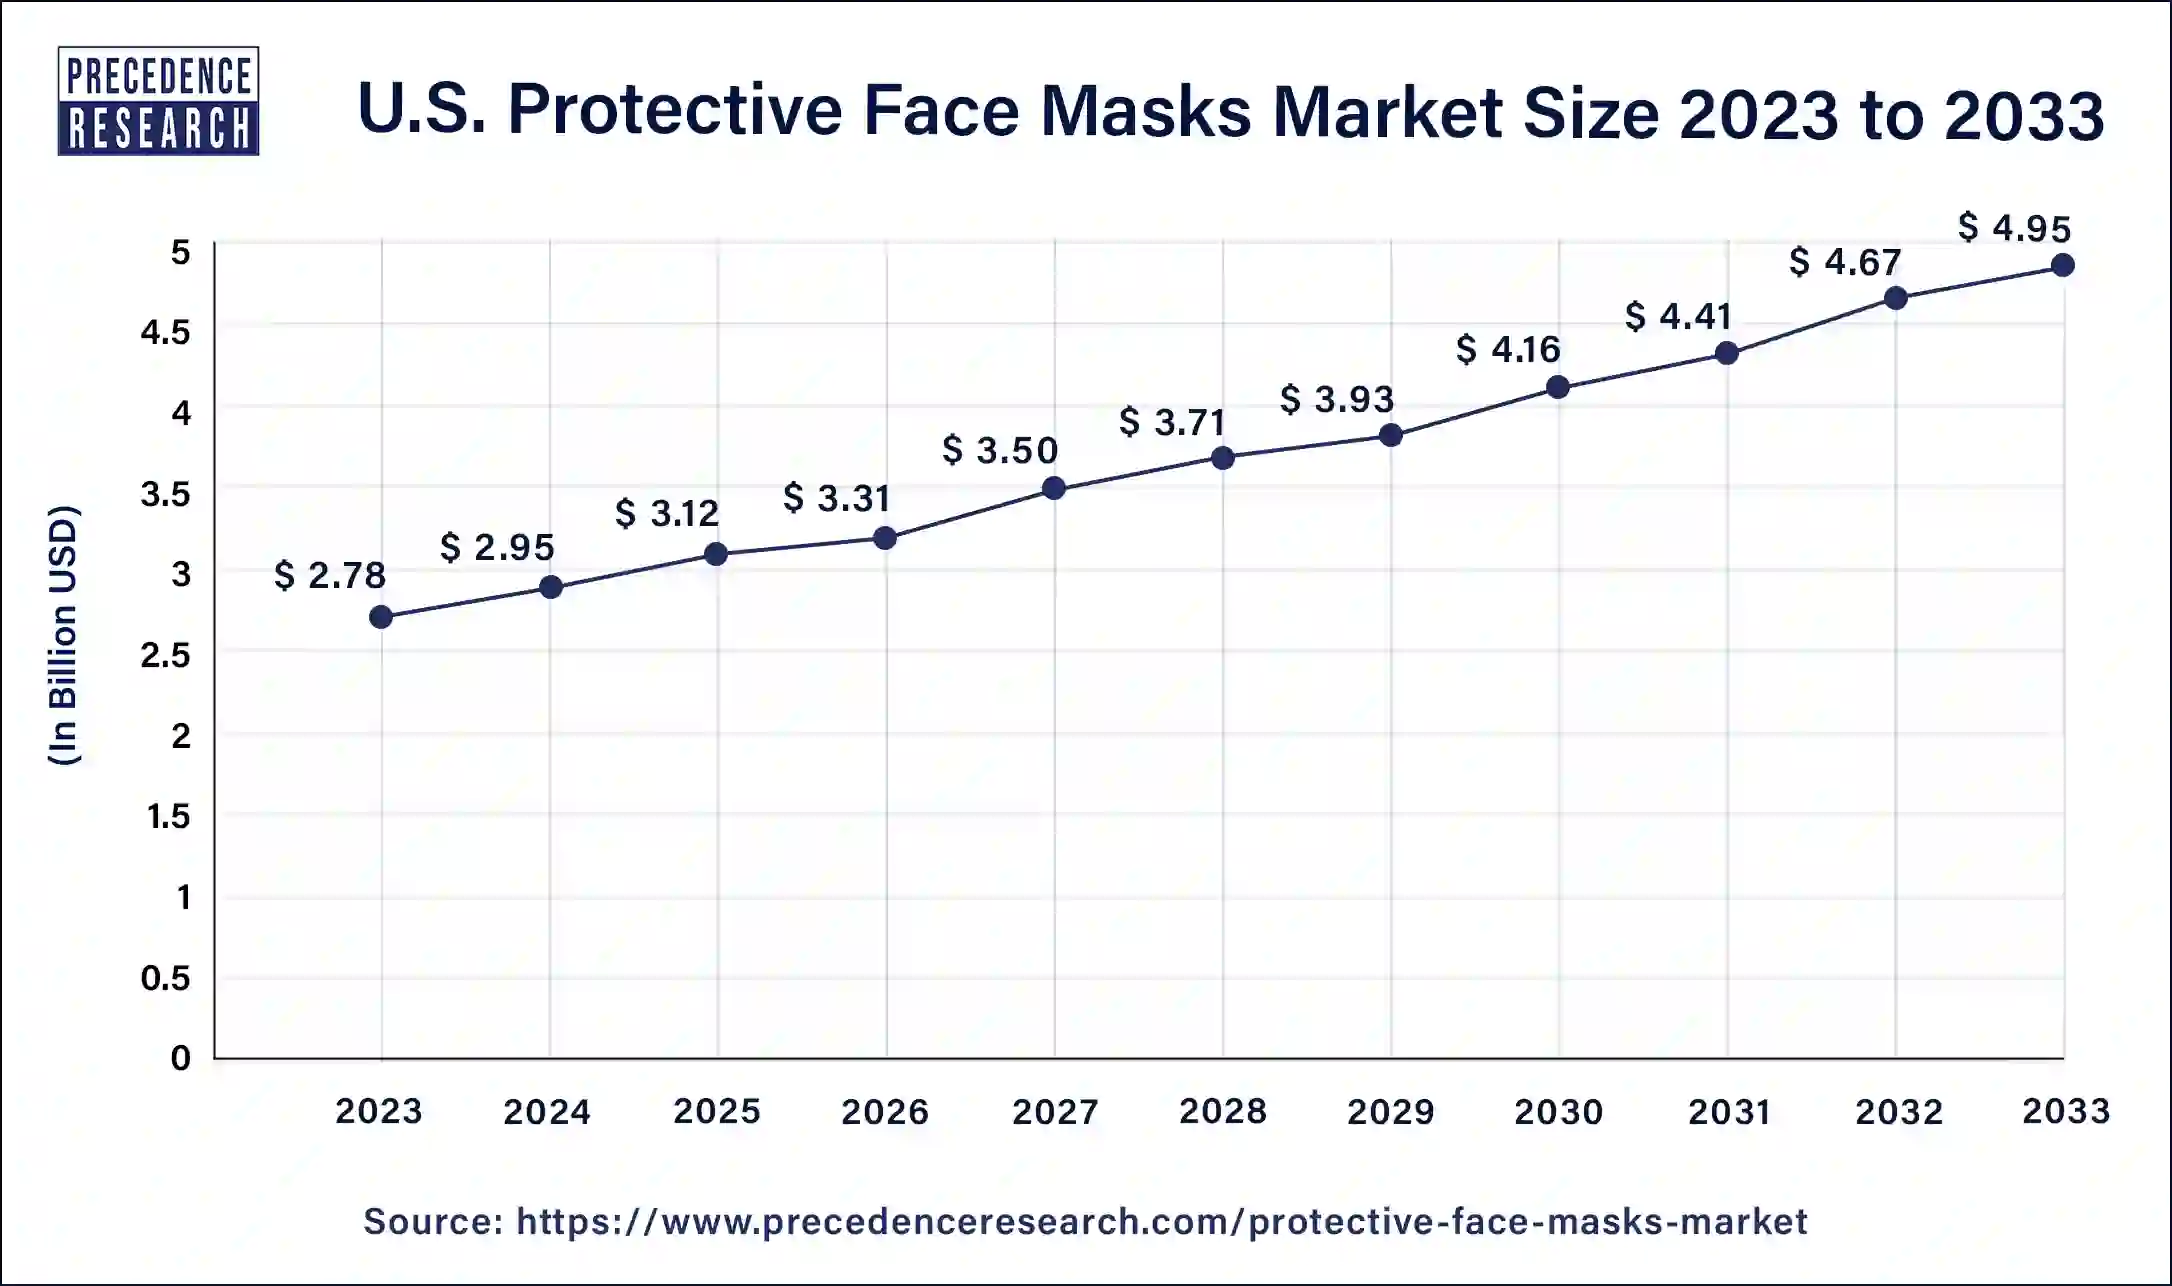 U.S. Protective Face Masks Market Size 2024 to 2033